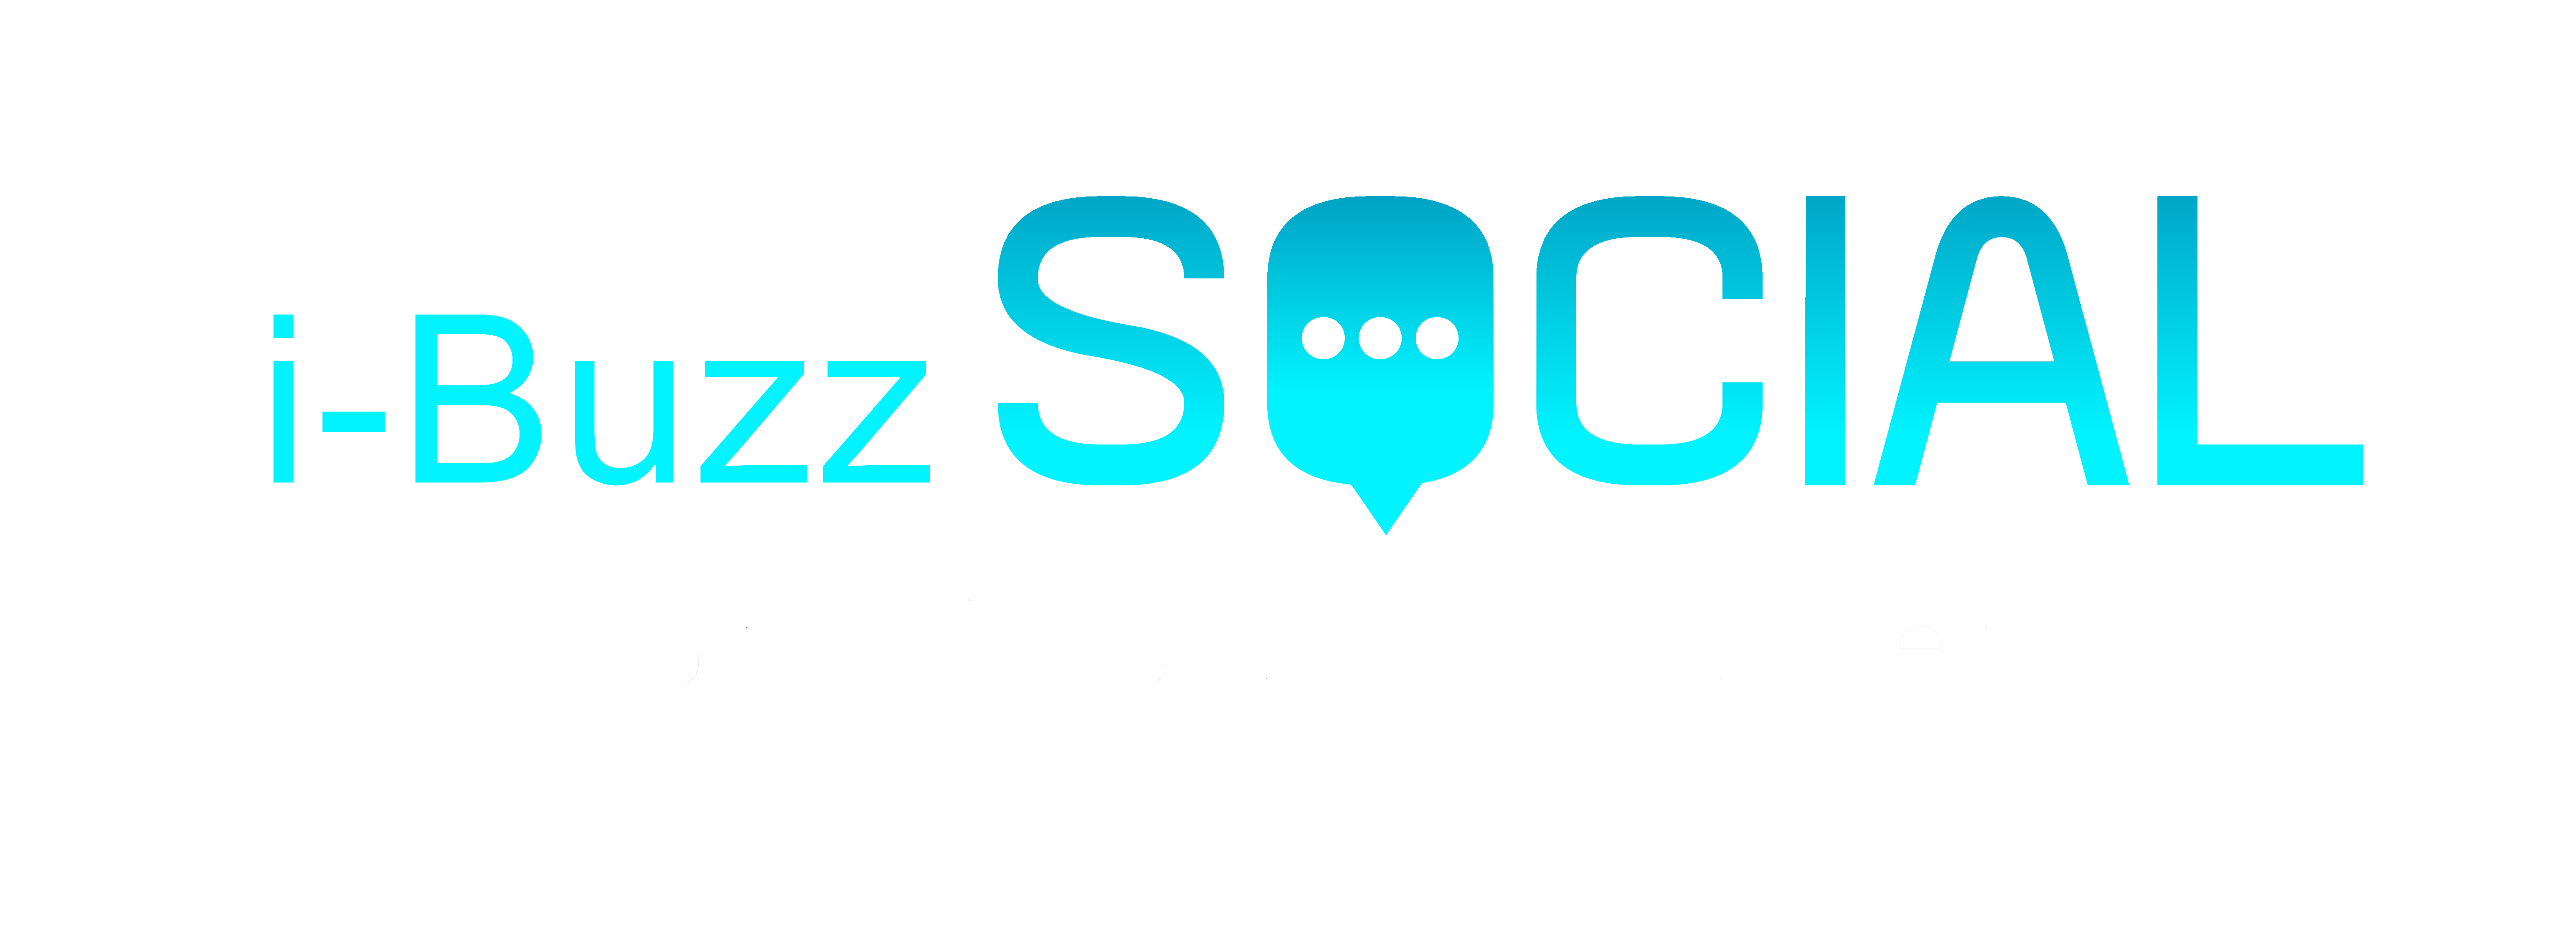 i-Buzz SOCIAL